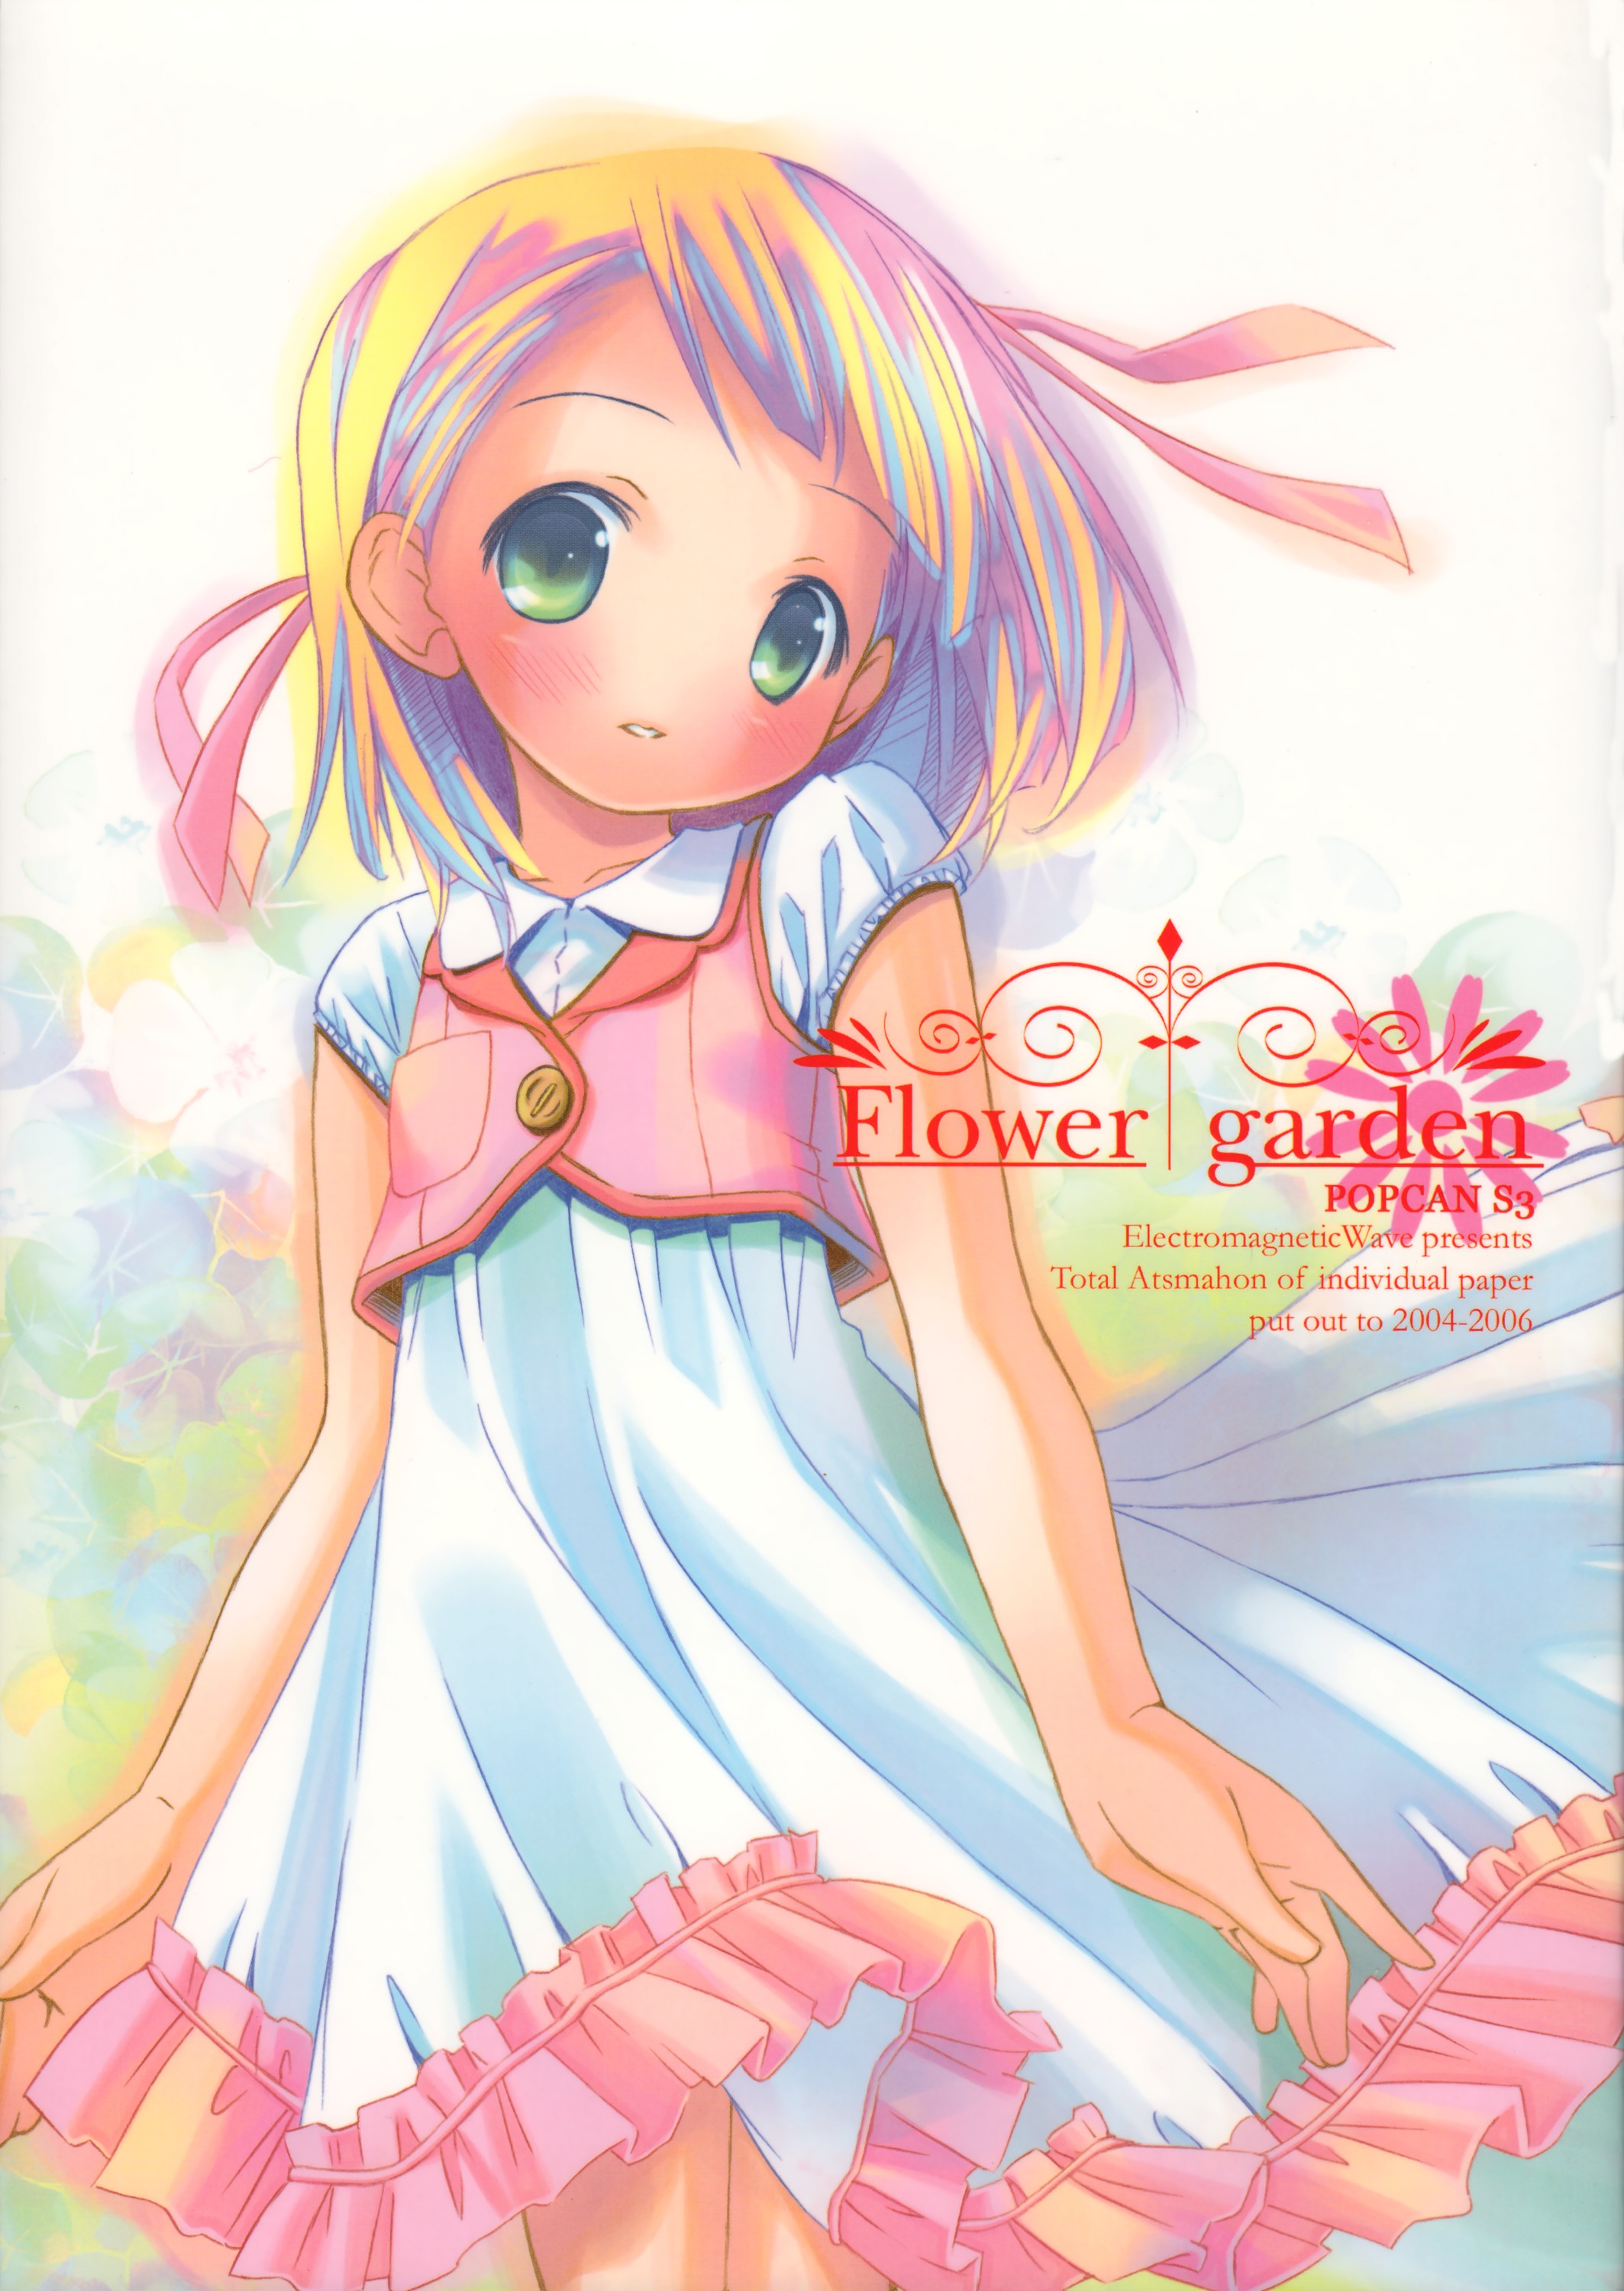 120474 main Flower garden 01